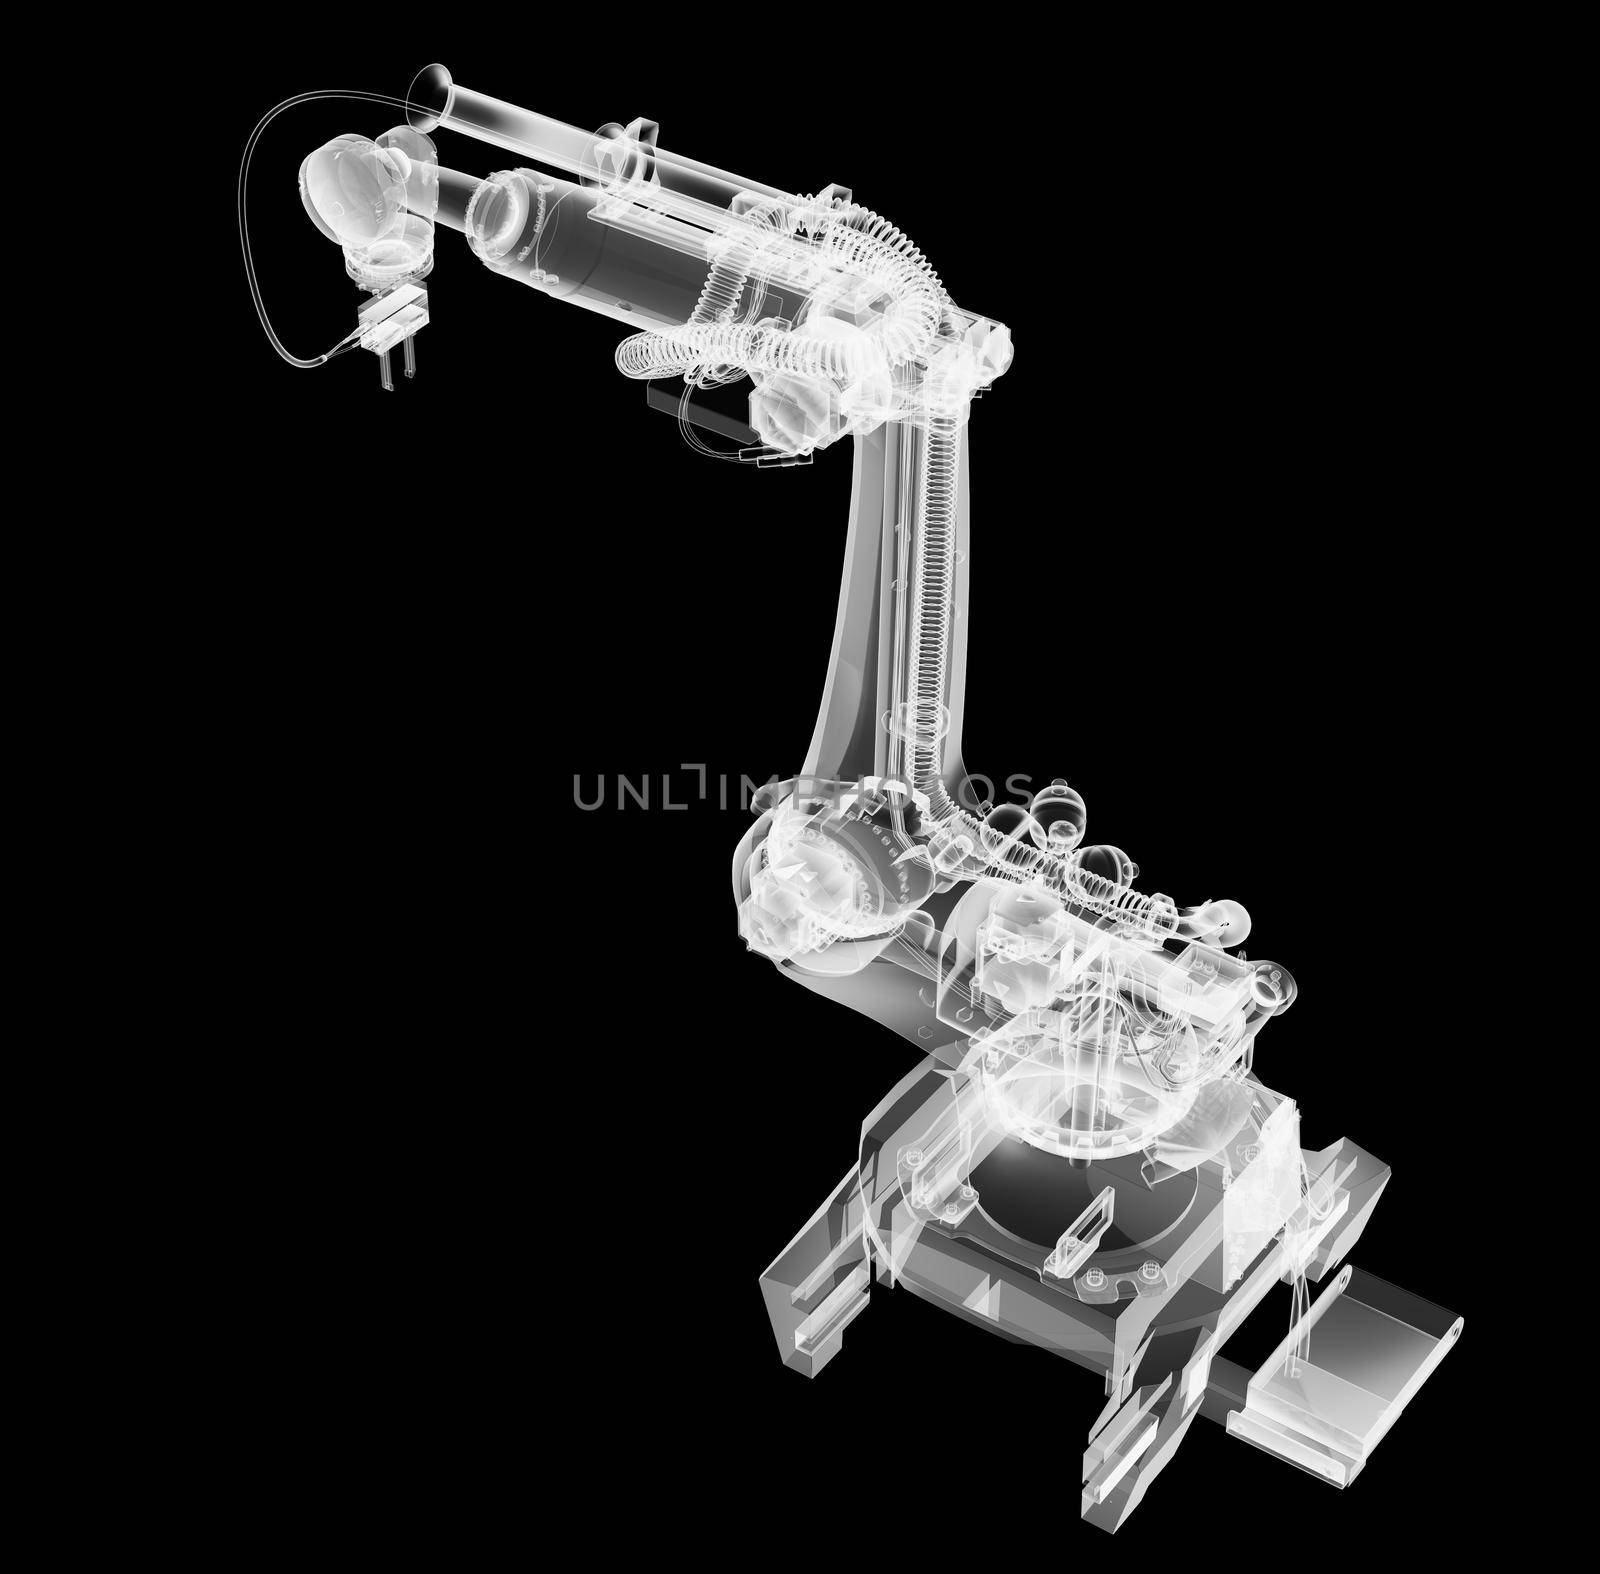 Industrial robot, x-ray transparent. 3D illustration. Non-destructive testing concept